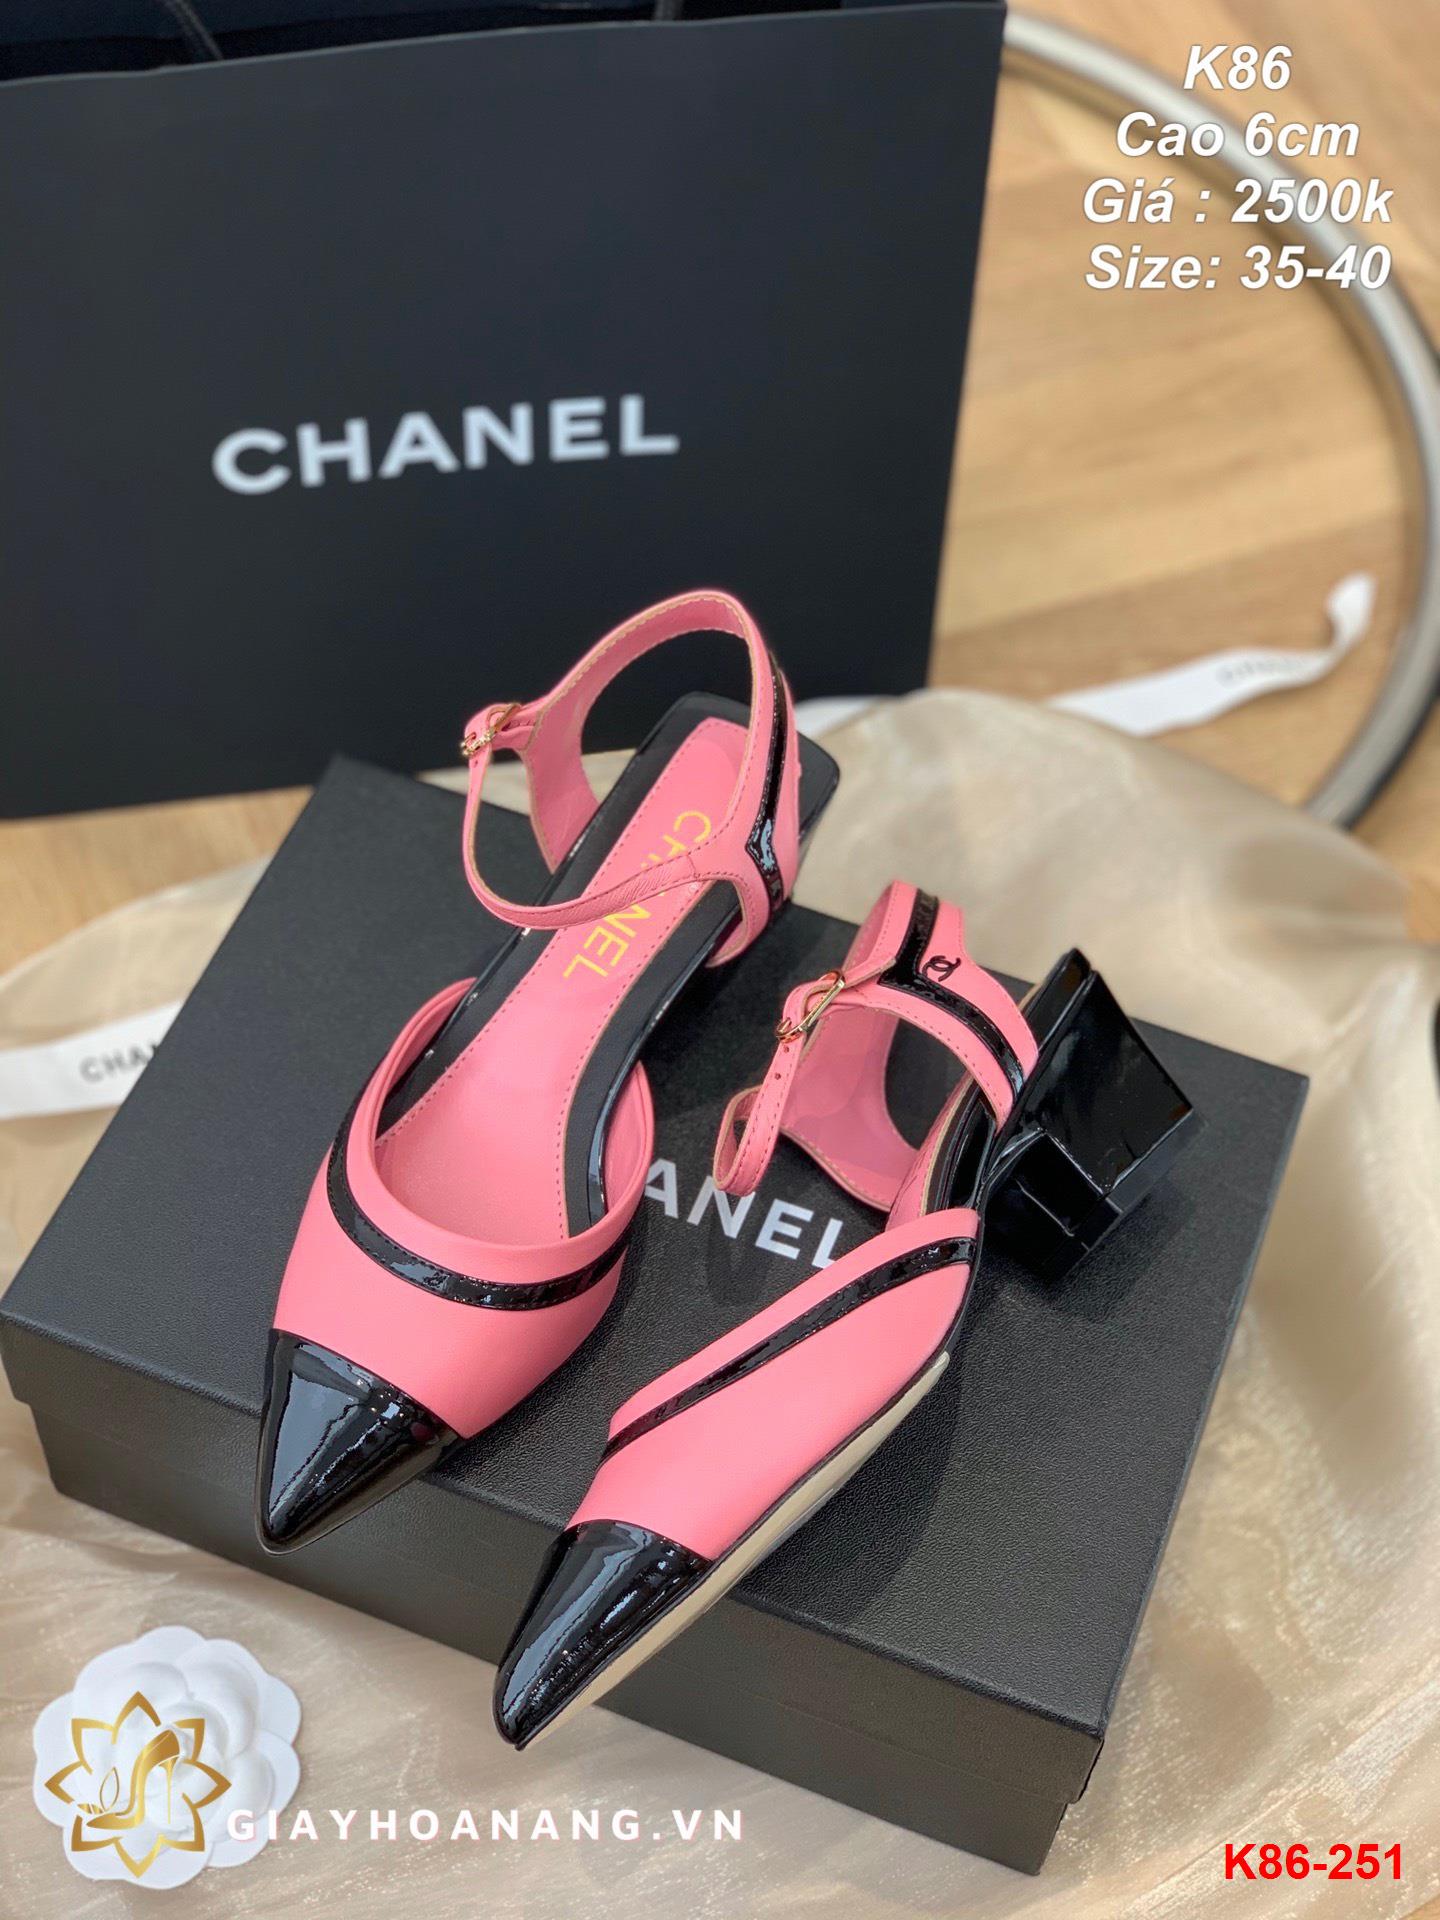 K86-251 Chanel sandal cao 6cm siêu cấp